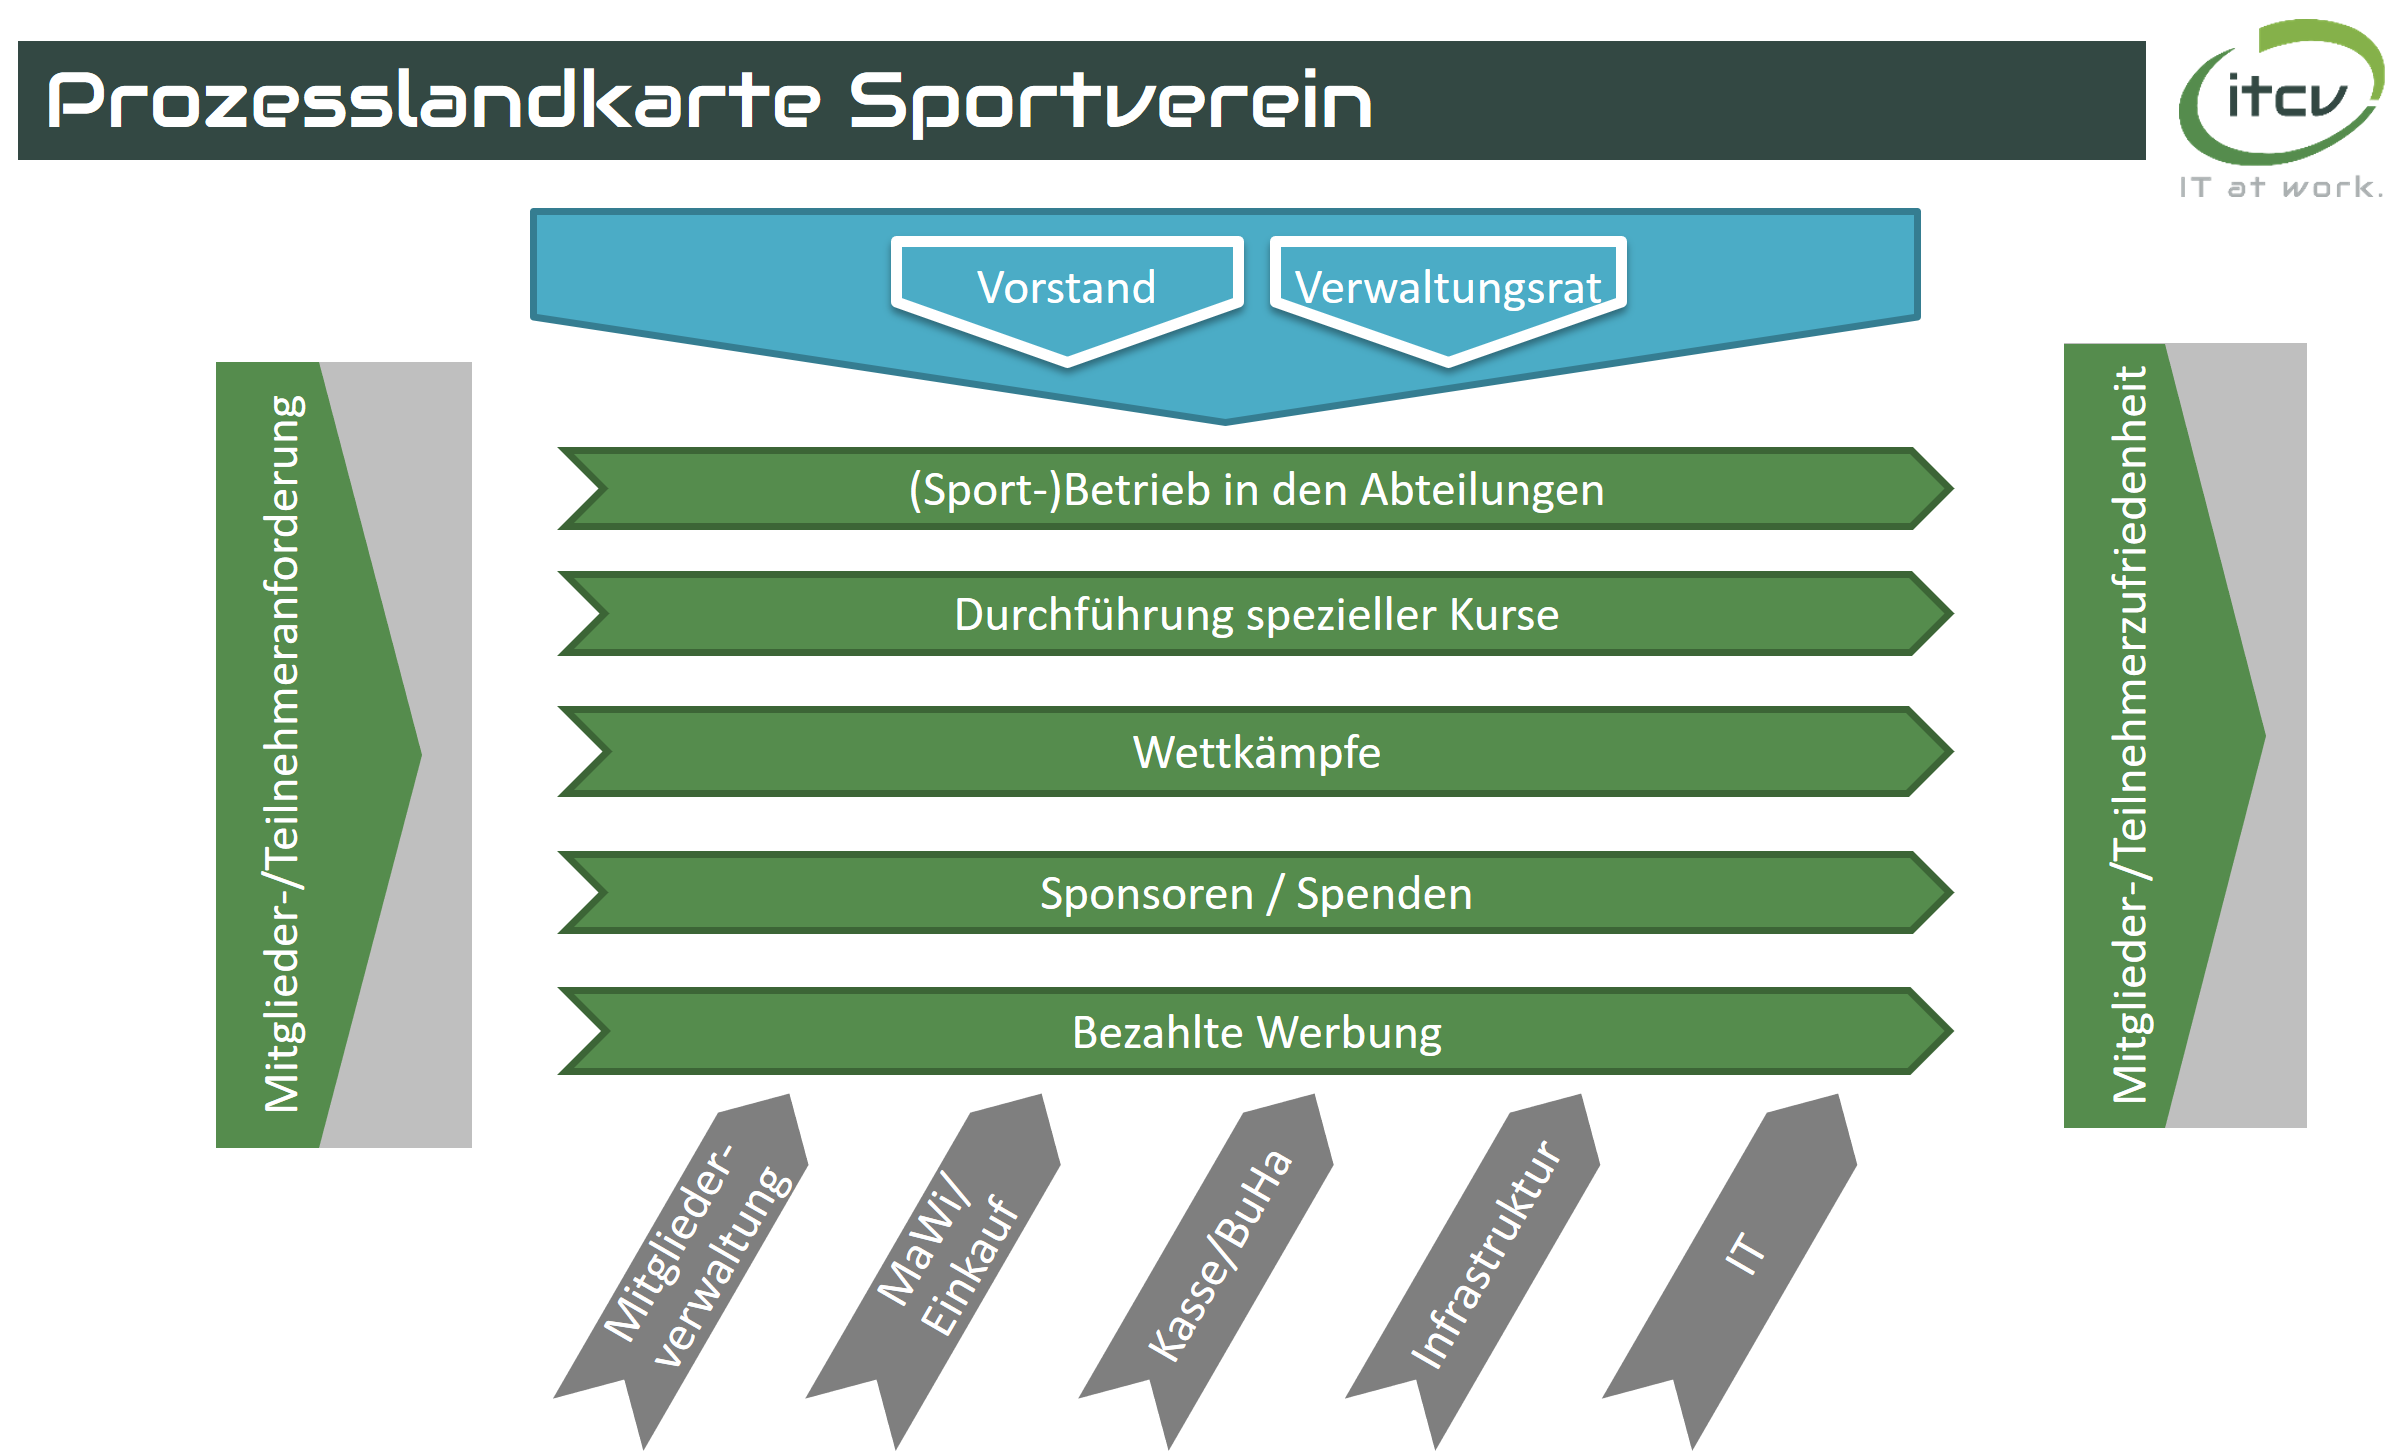 Prozesslandkarte Sportverein